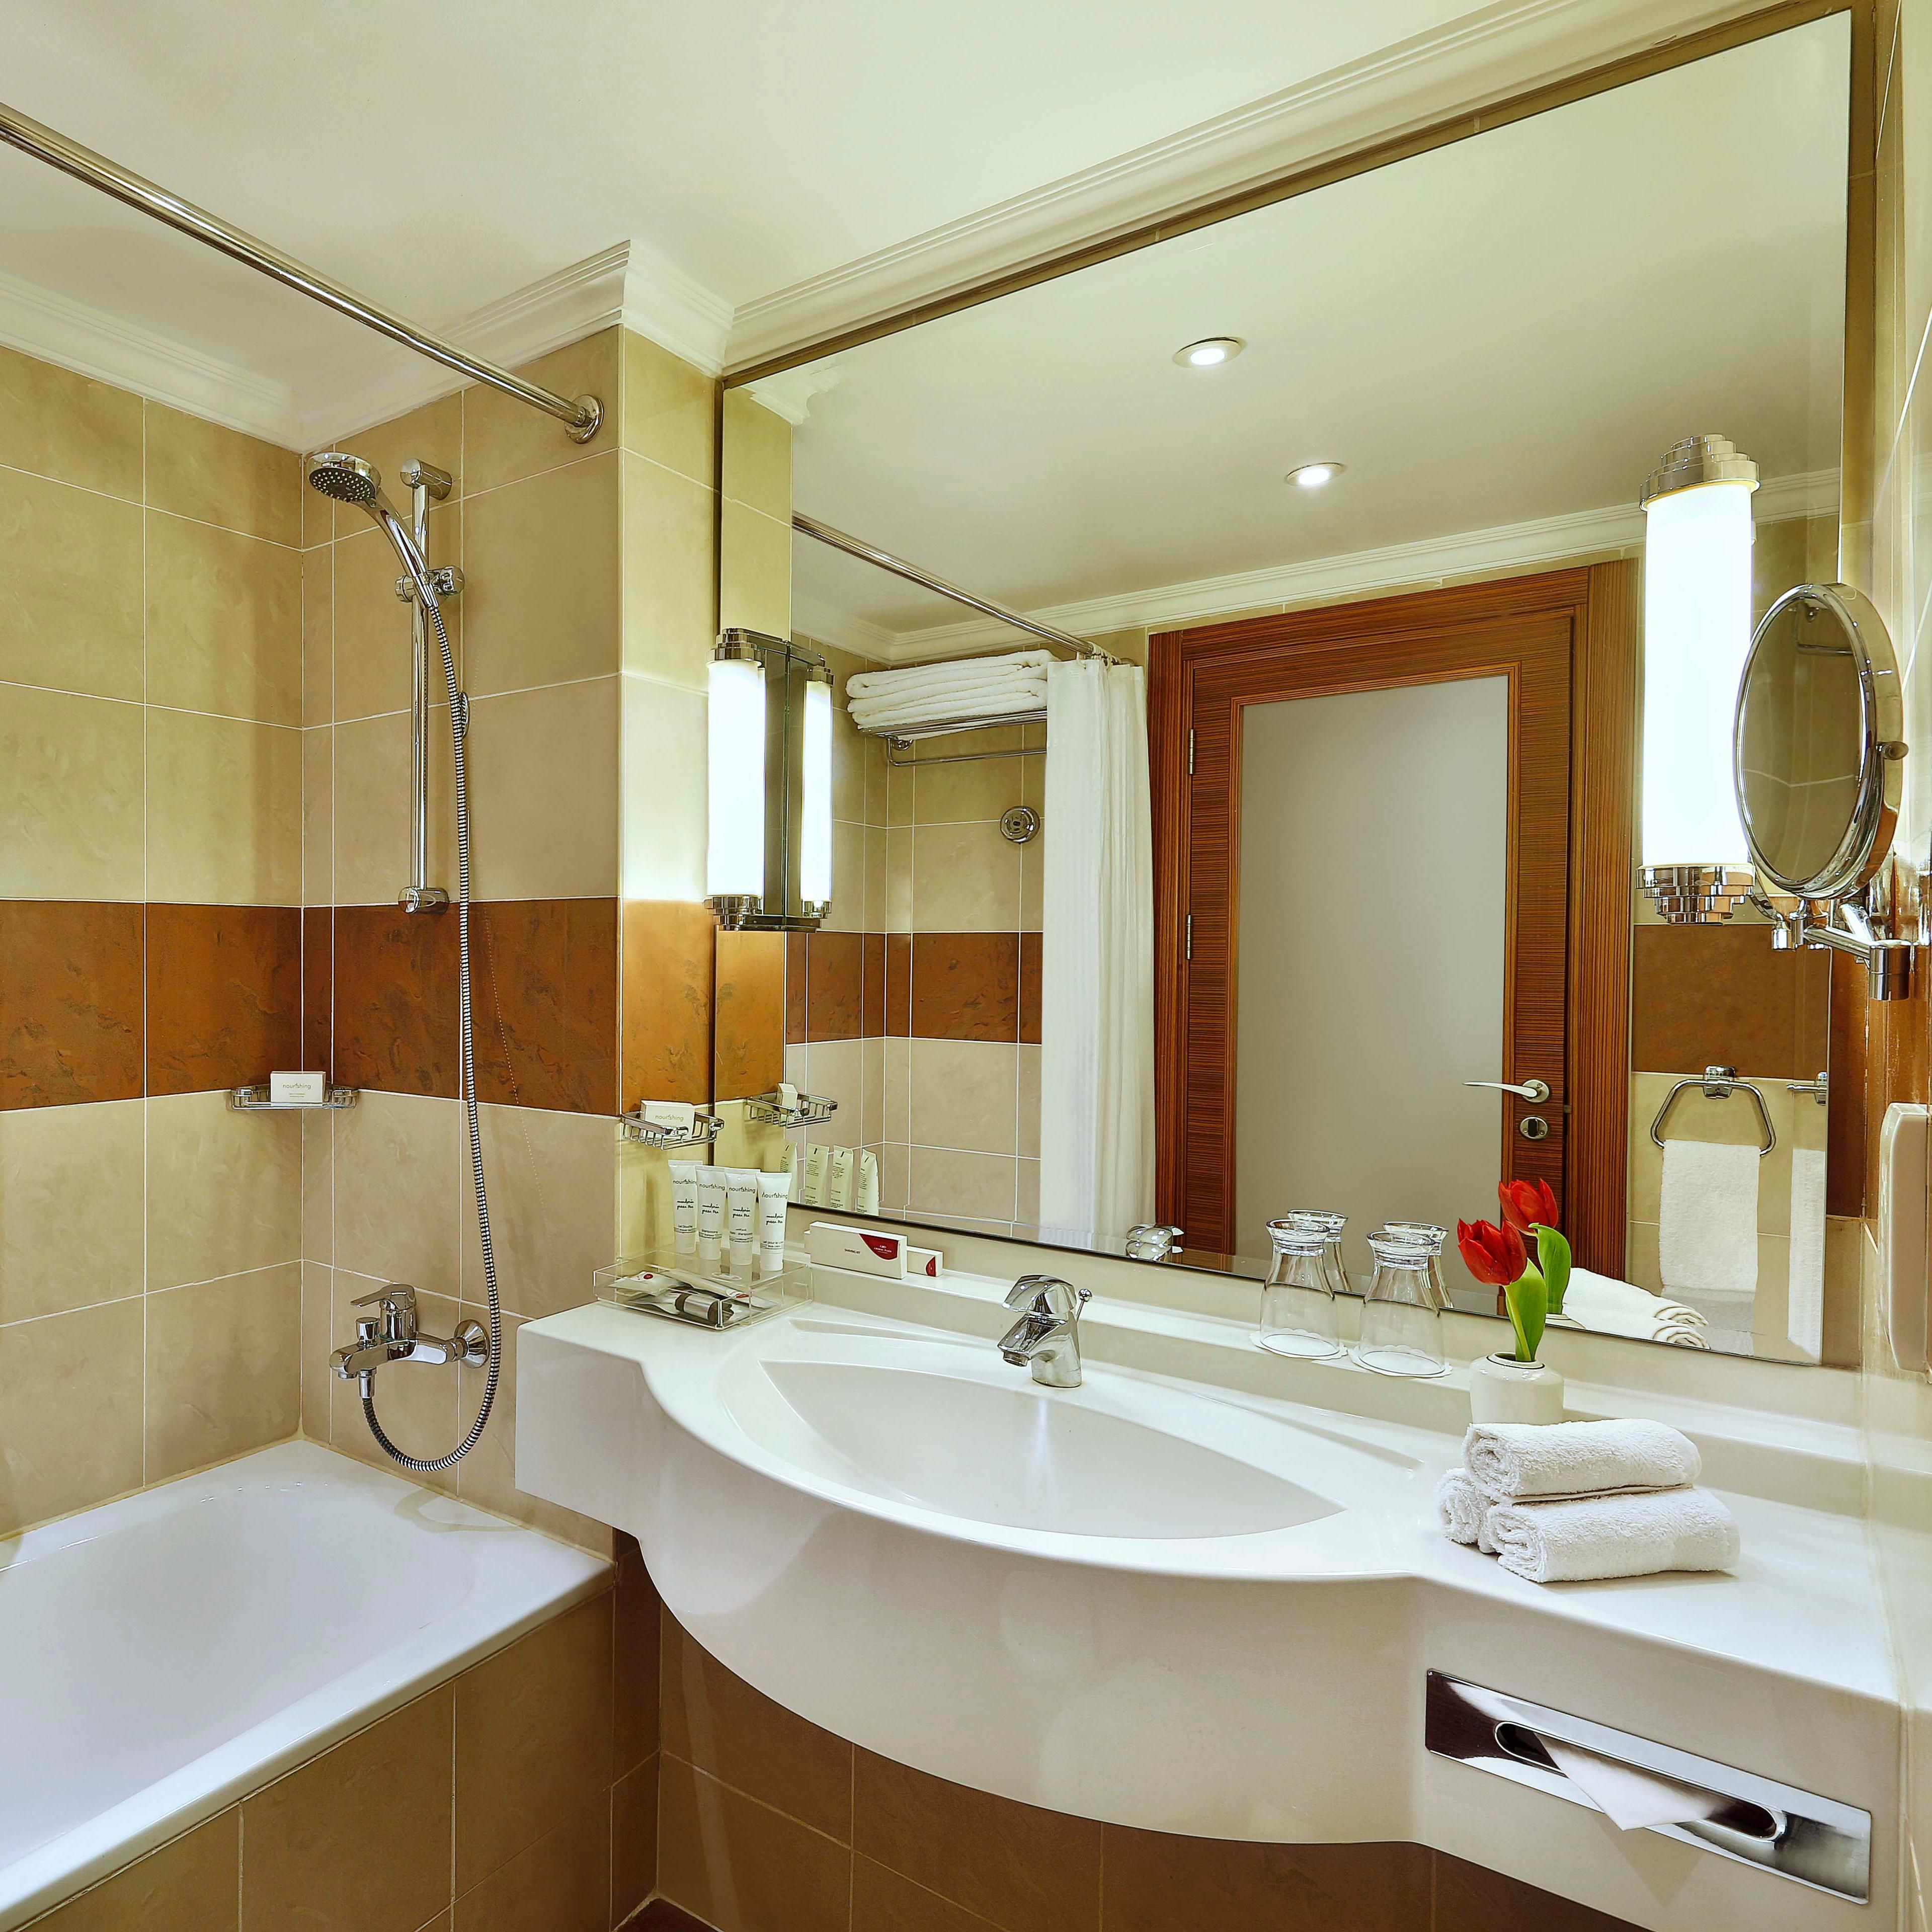 Delightful Bathroom with modern amenities